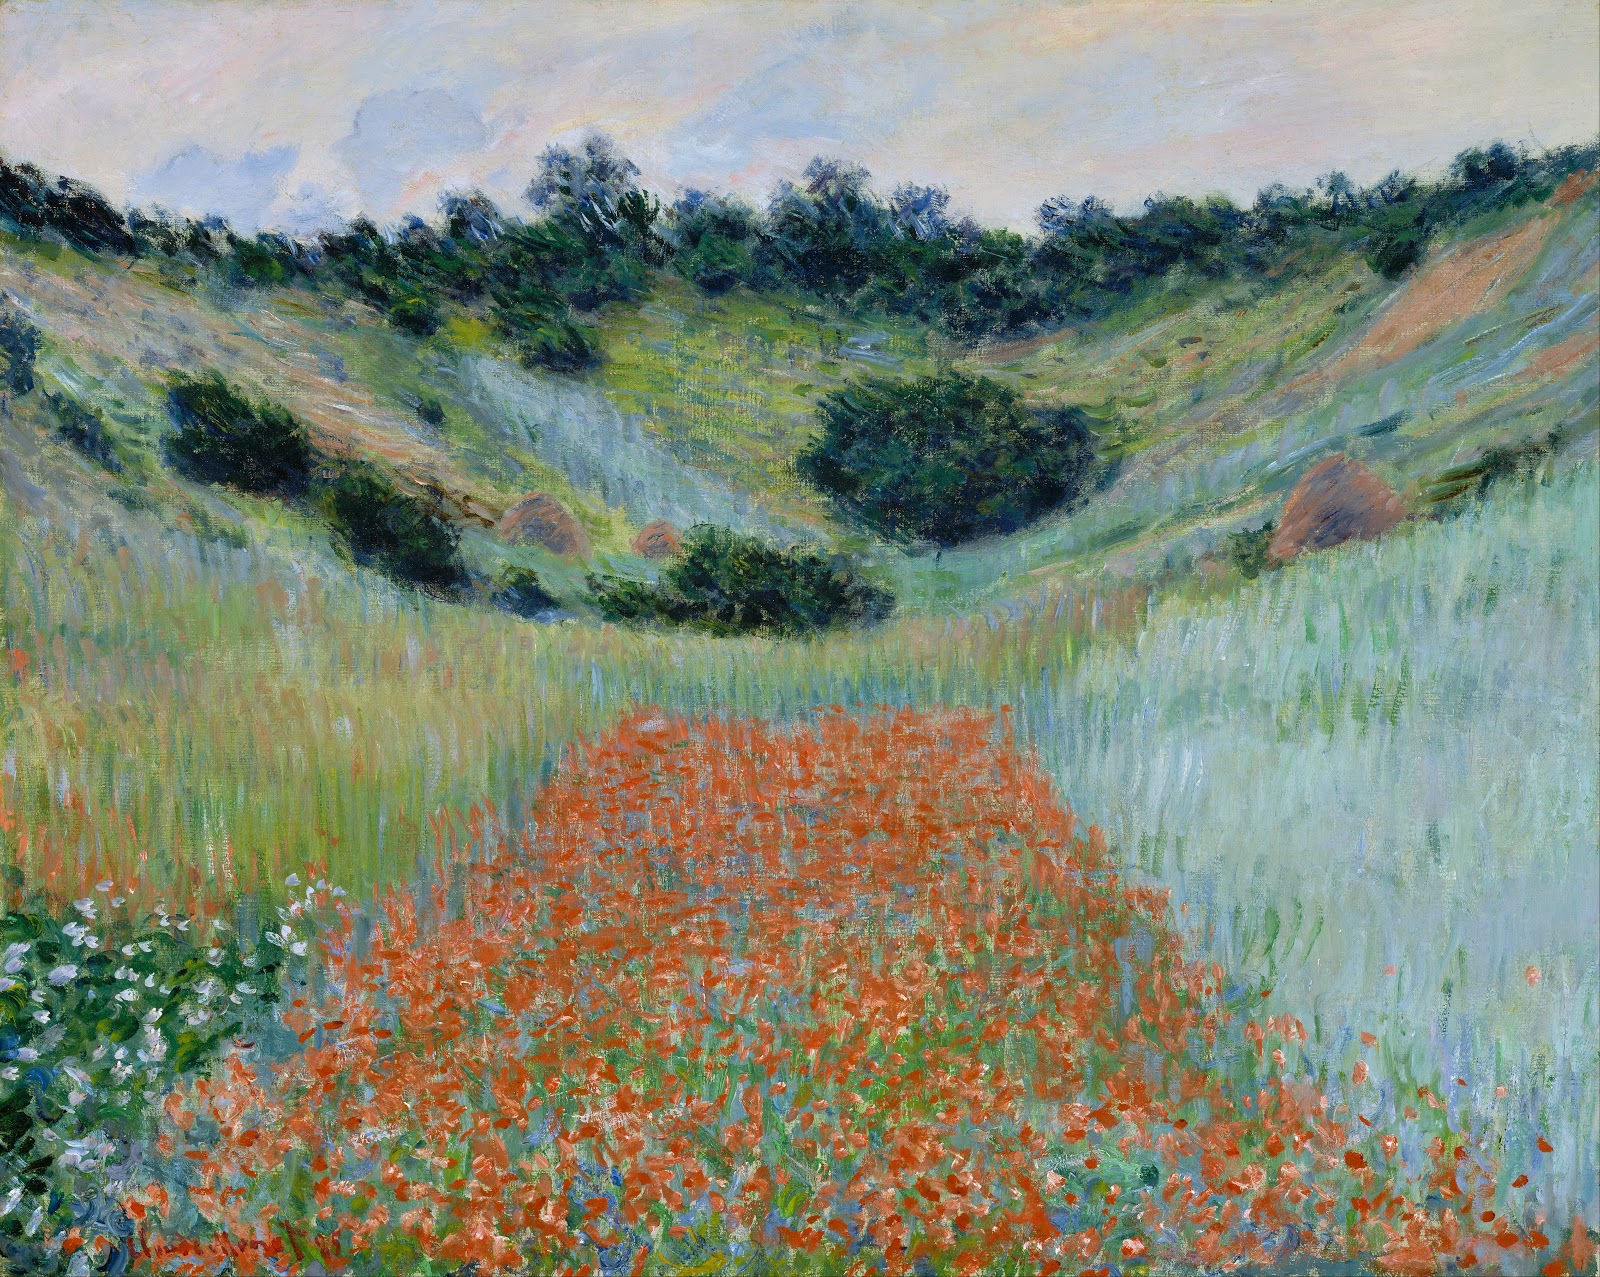 Claude+Monet-1840-1926 (519).jpg